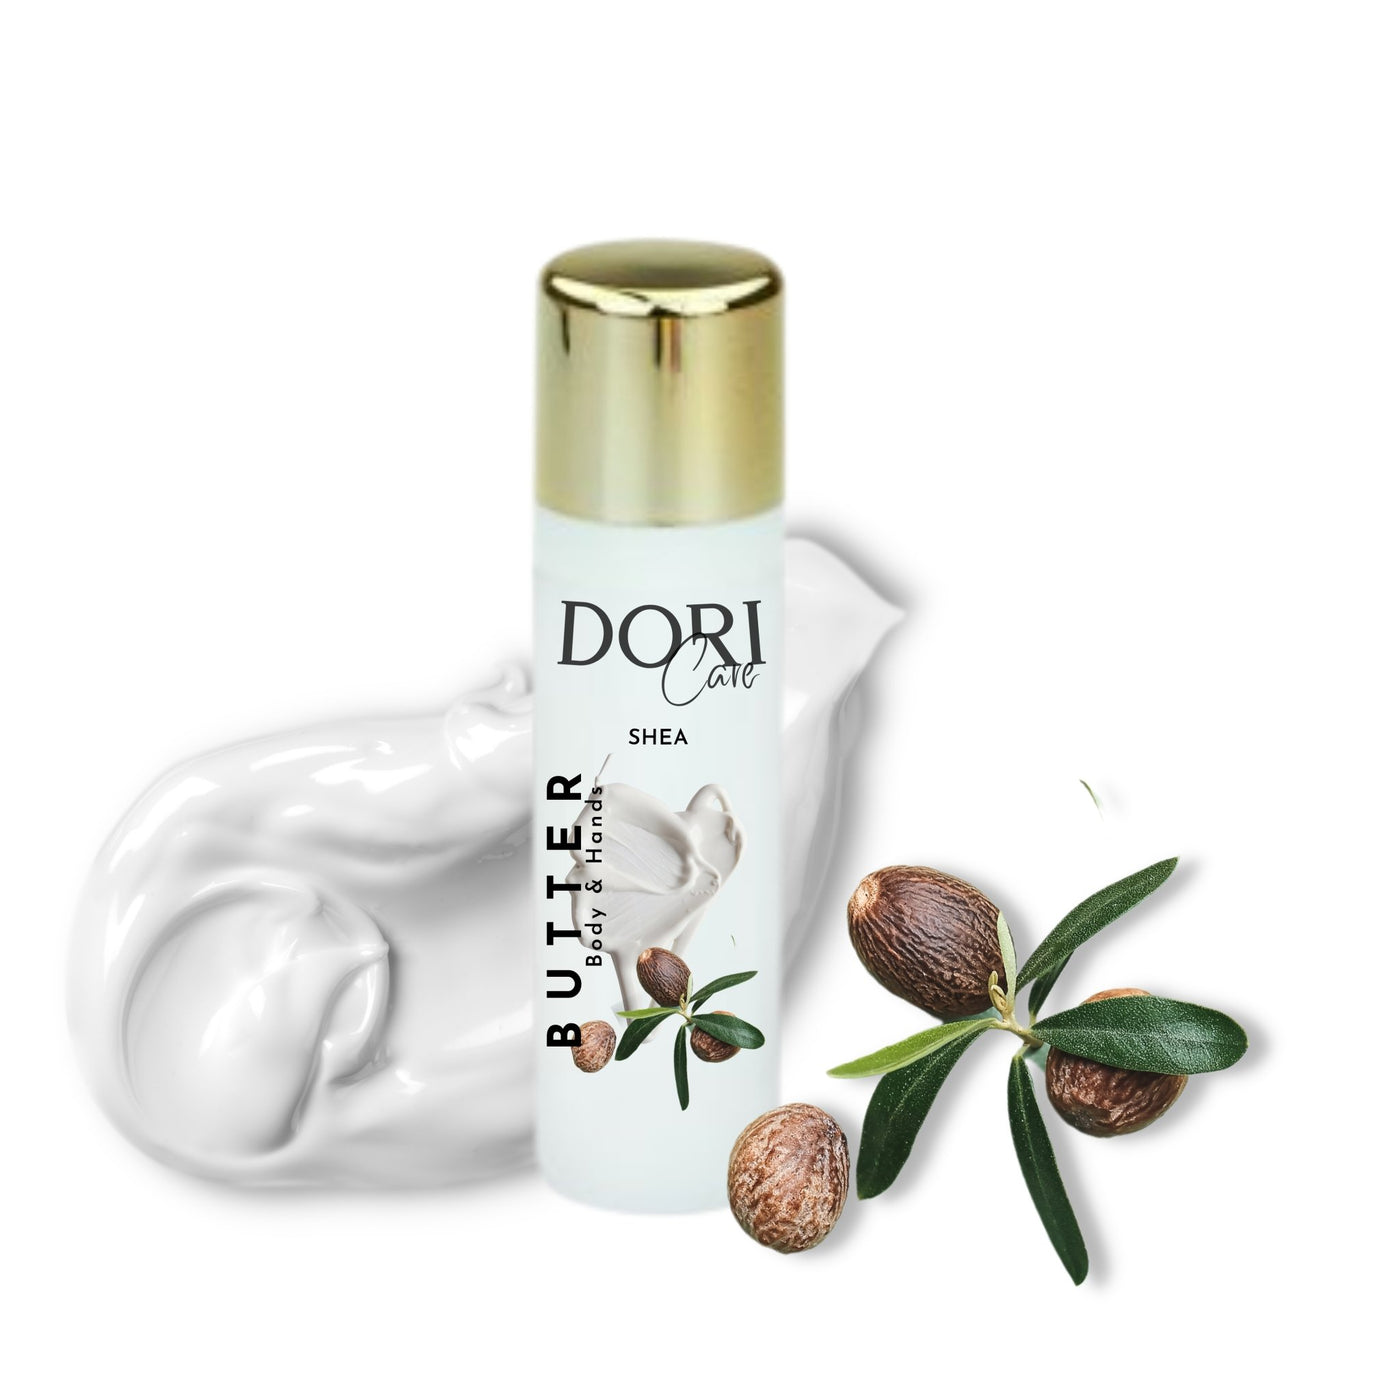 DORI Care BUTTER - Body & Hands  - Shea - Doriana Cosmetics GmbH